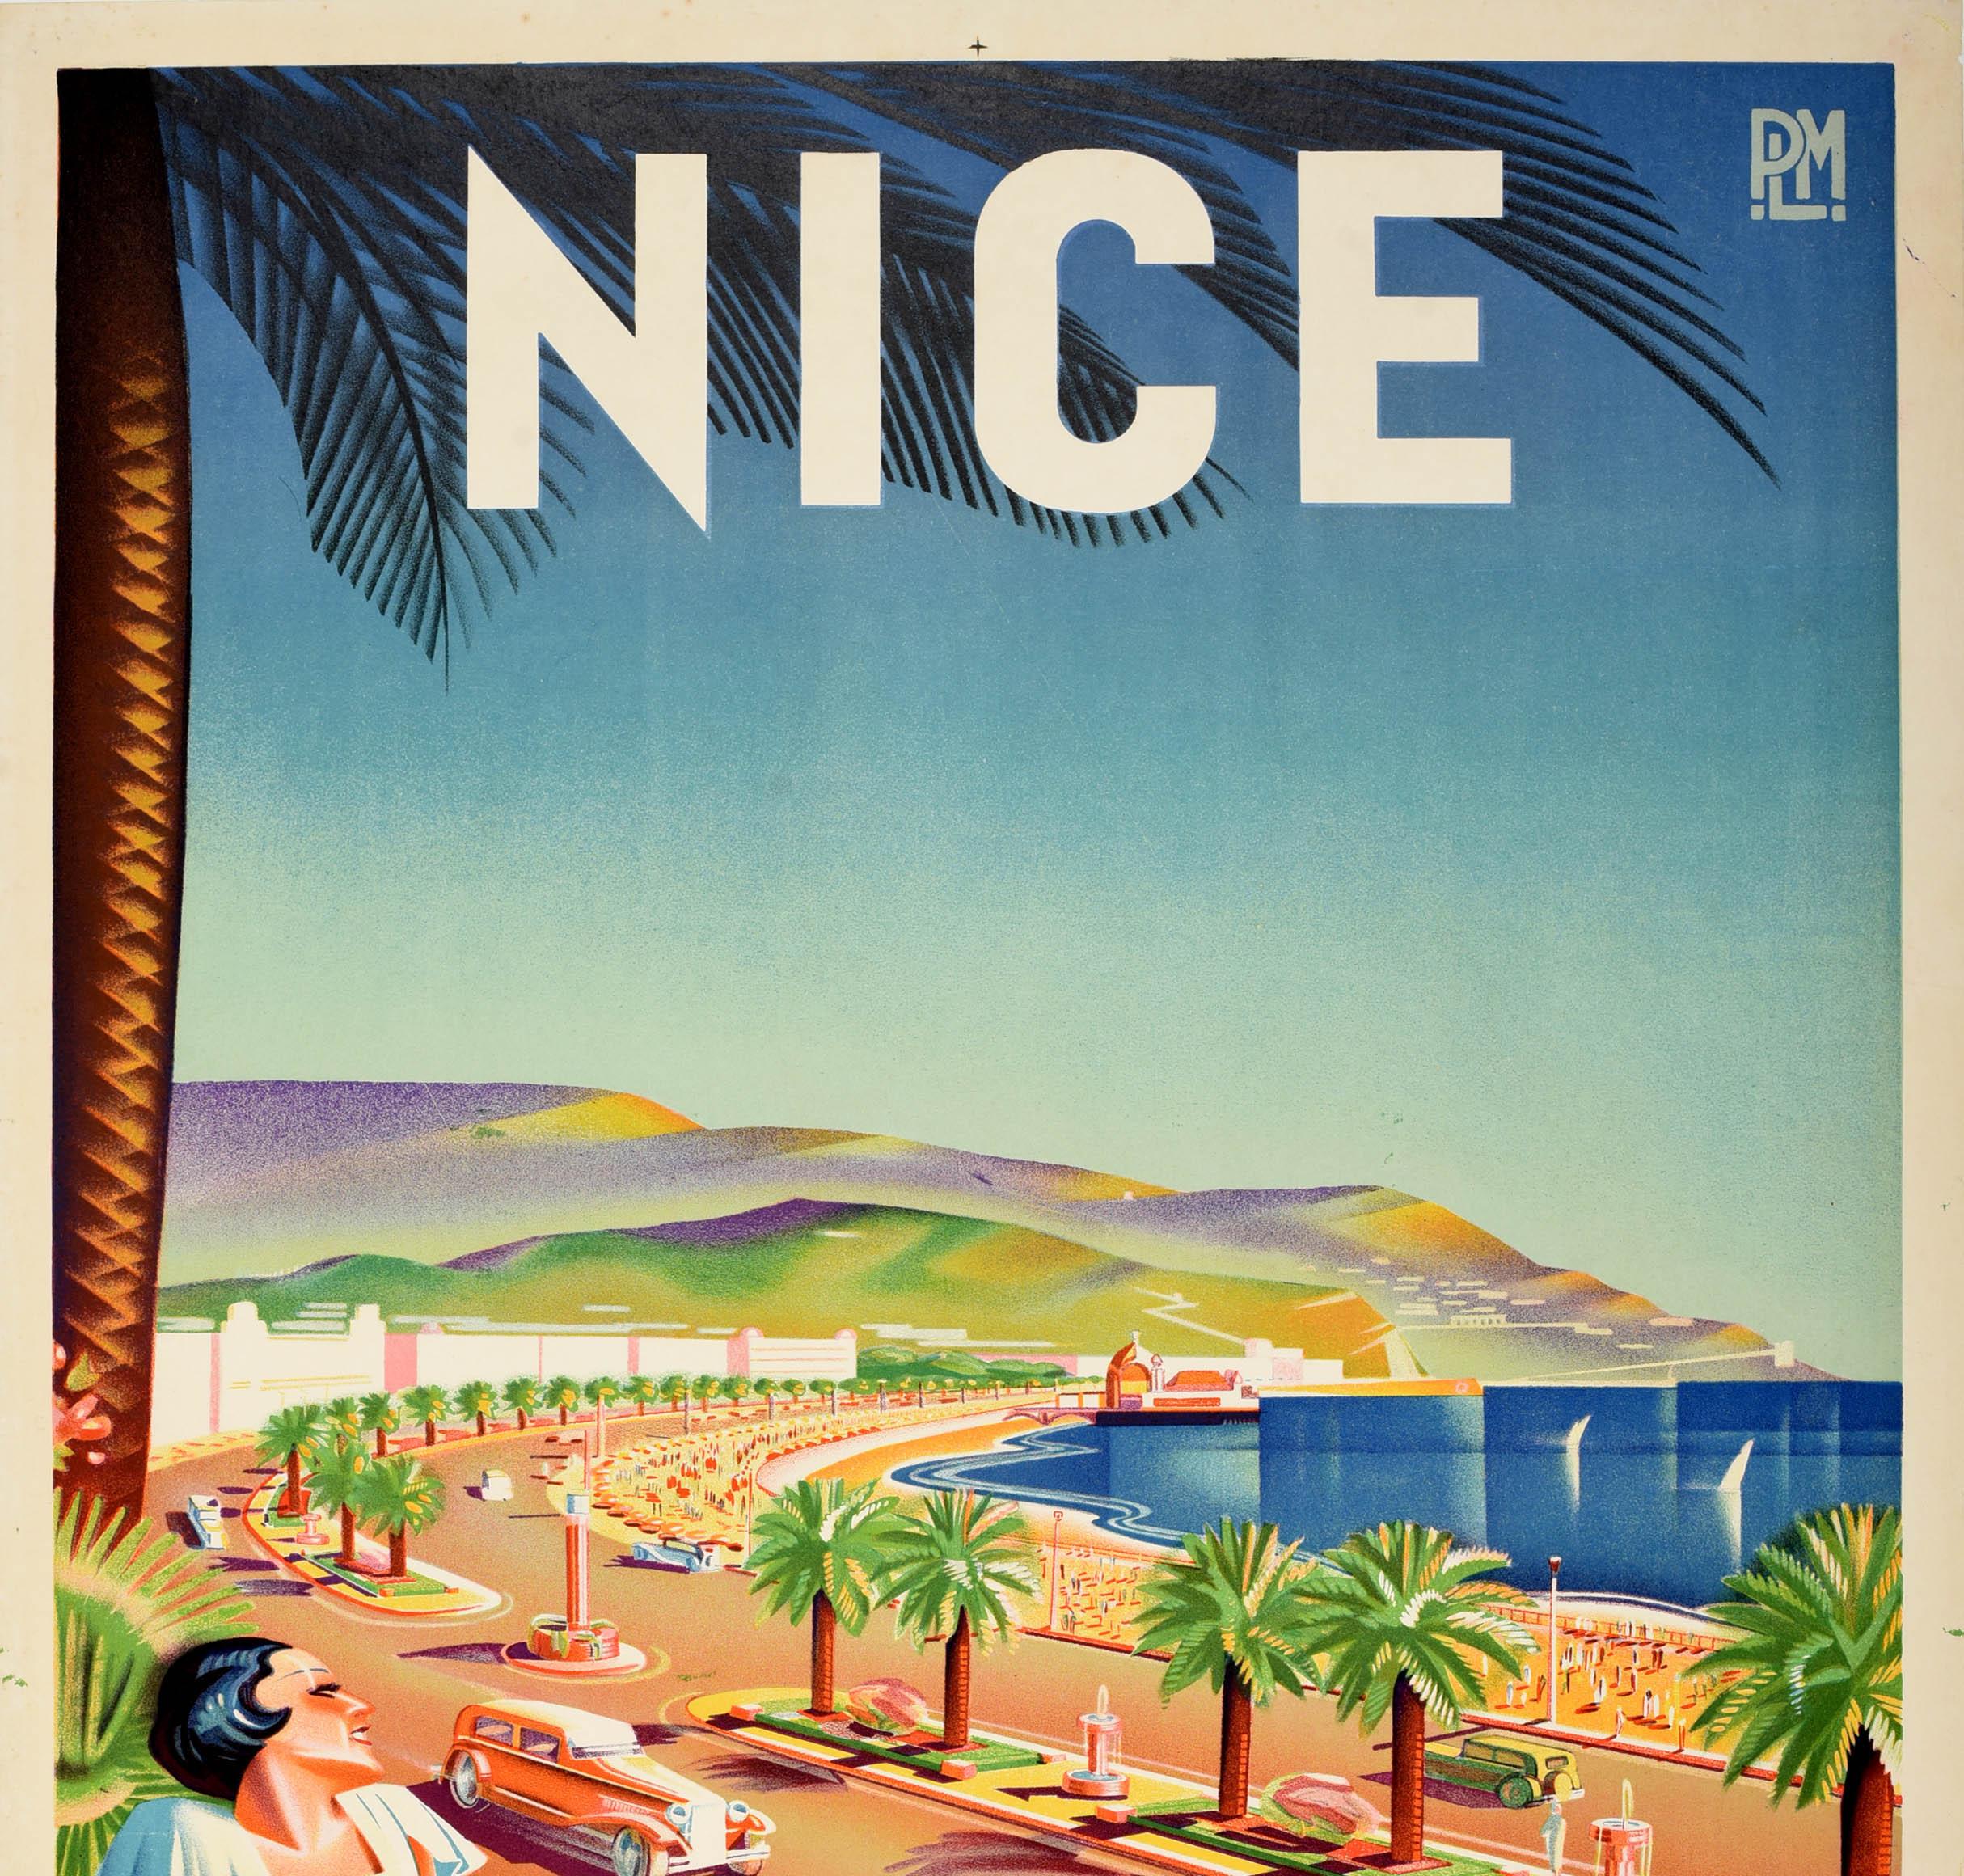 vintage travel posters